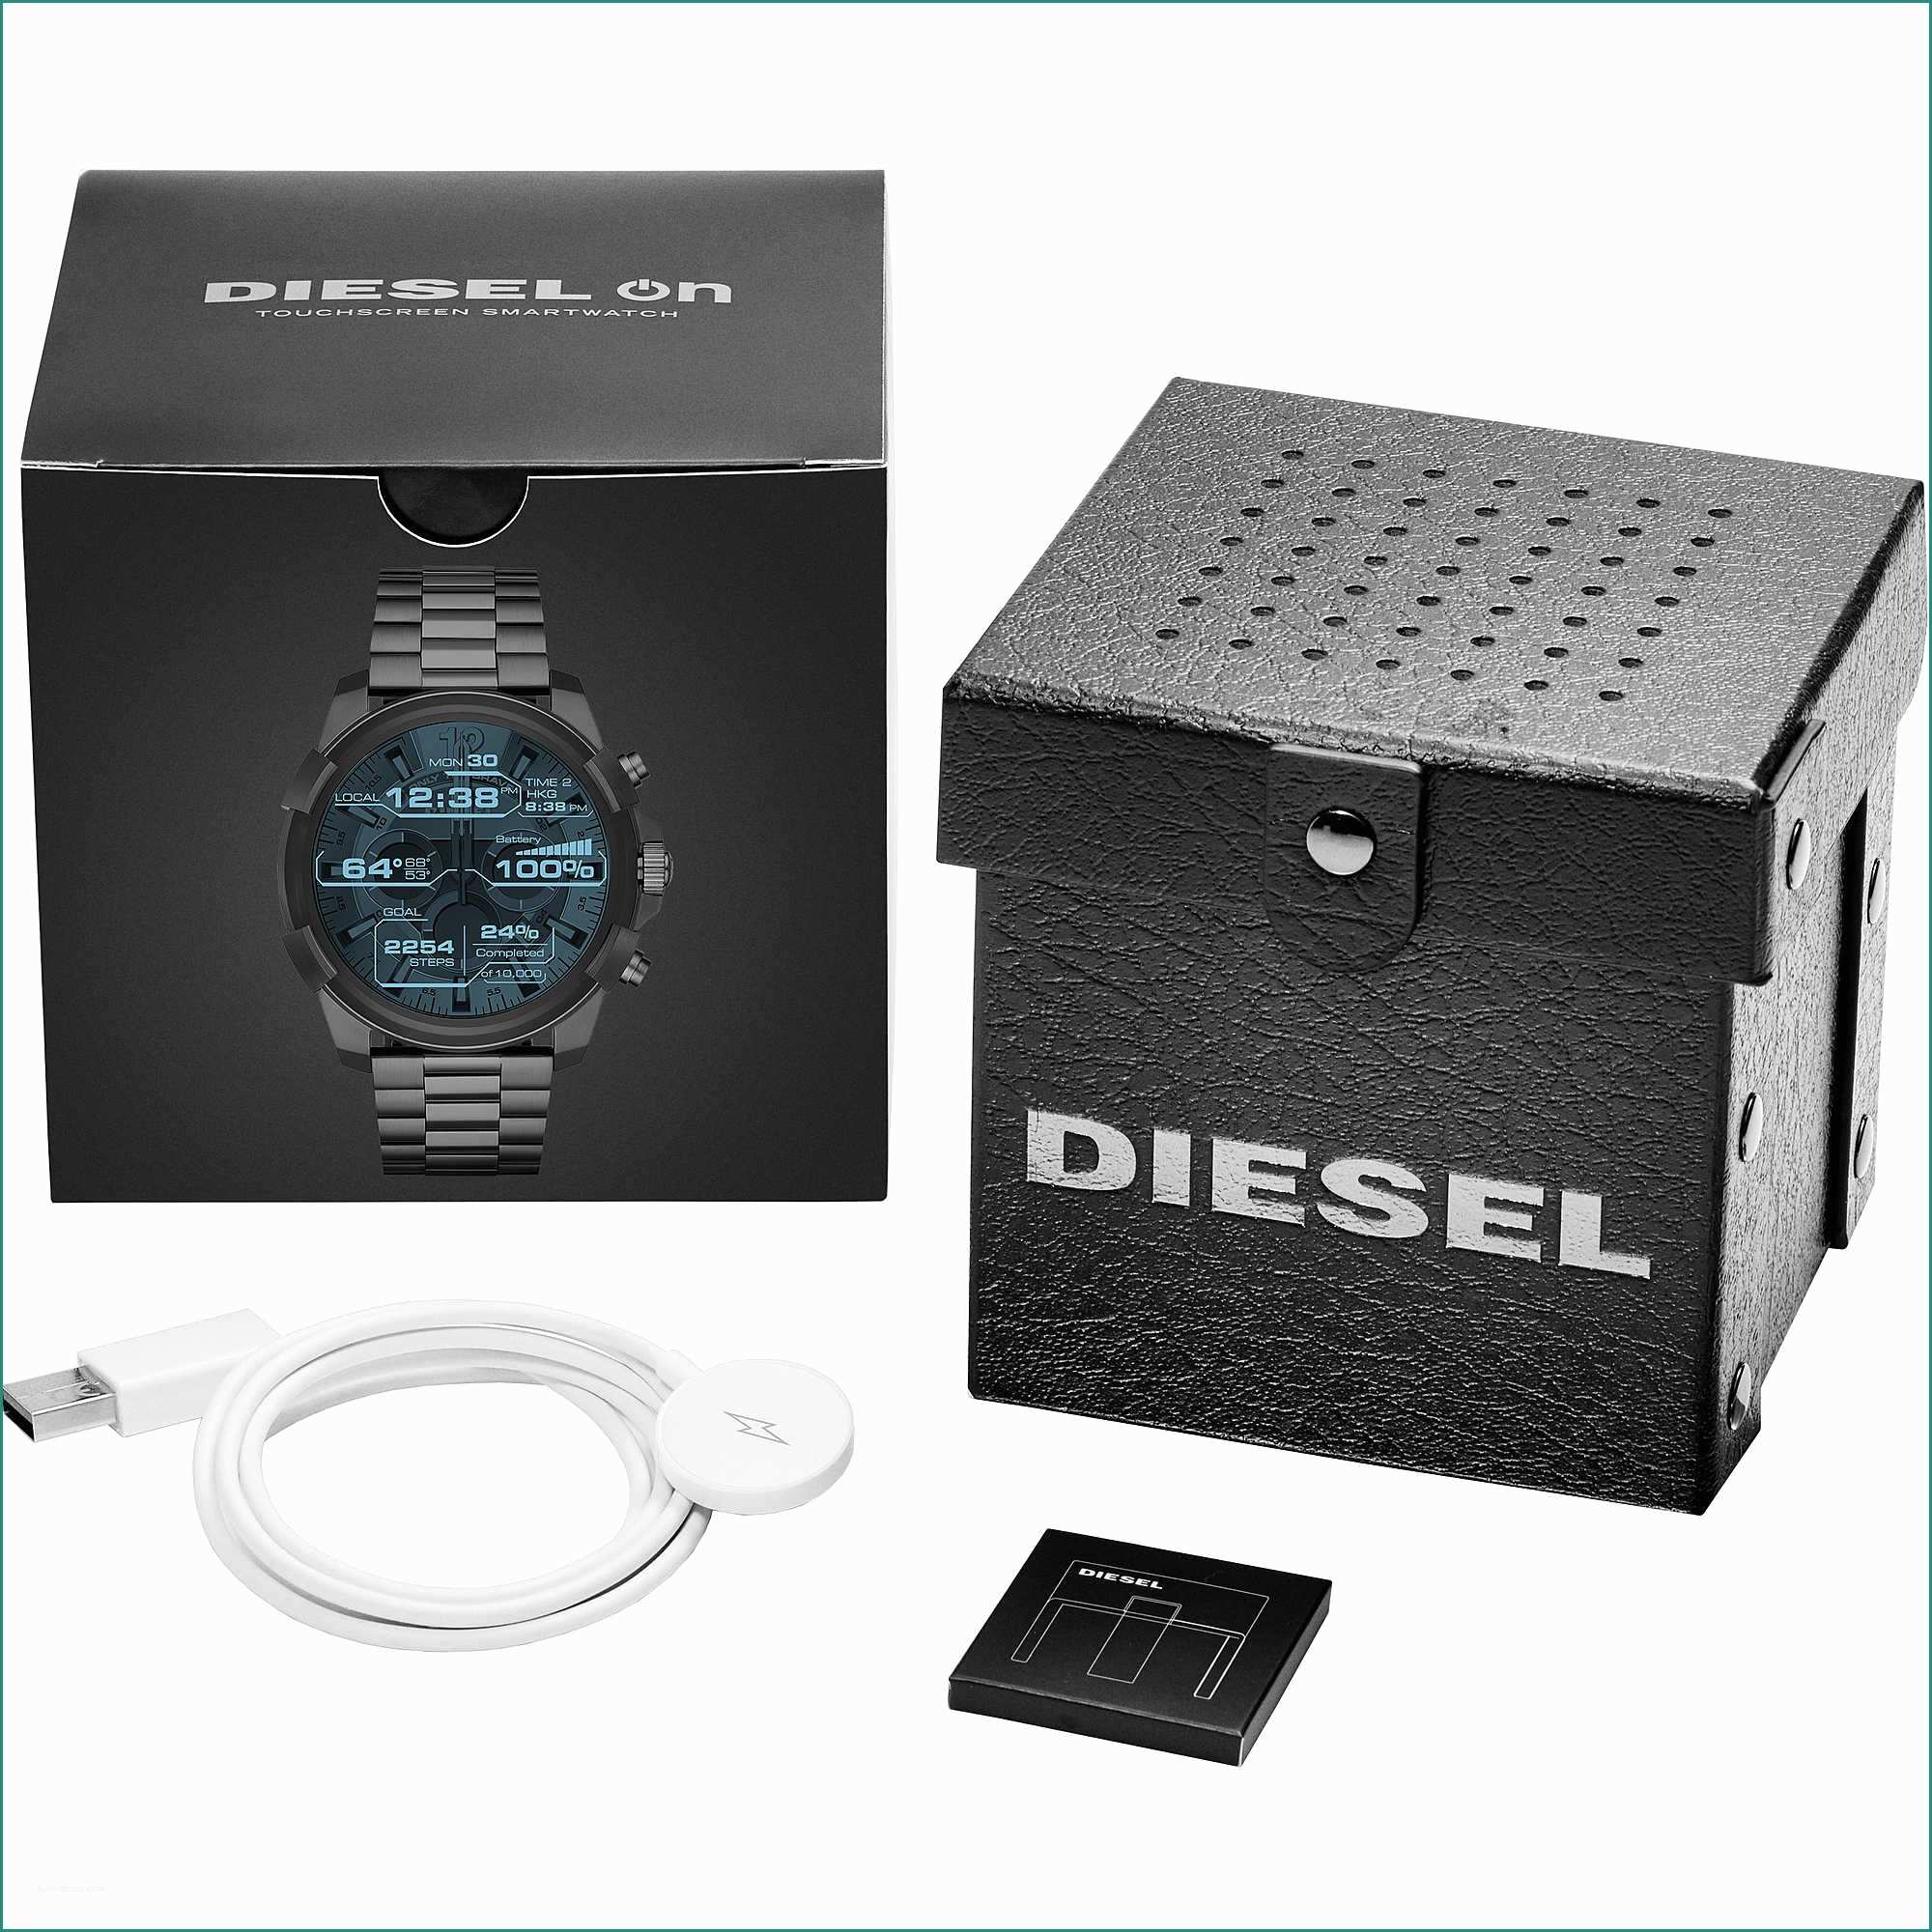 Regali Per Cresima Maschio E orologio Smartwatch Uomo Diesel Full Guard Dzt2004 Smartwatches Diesel